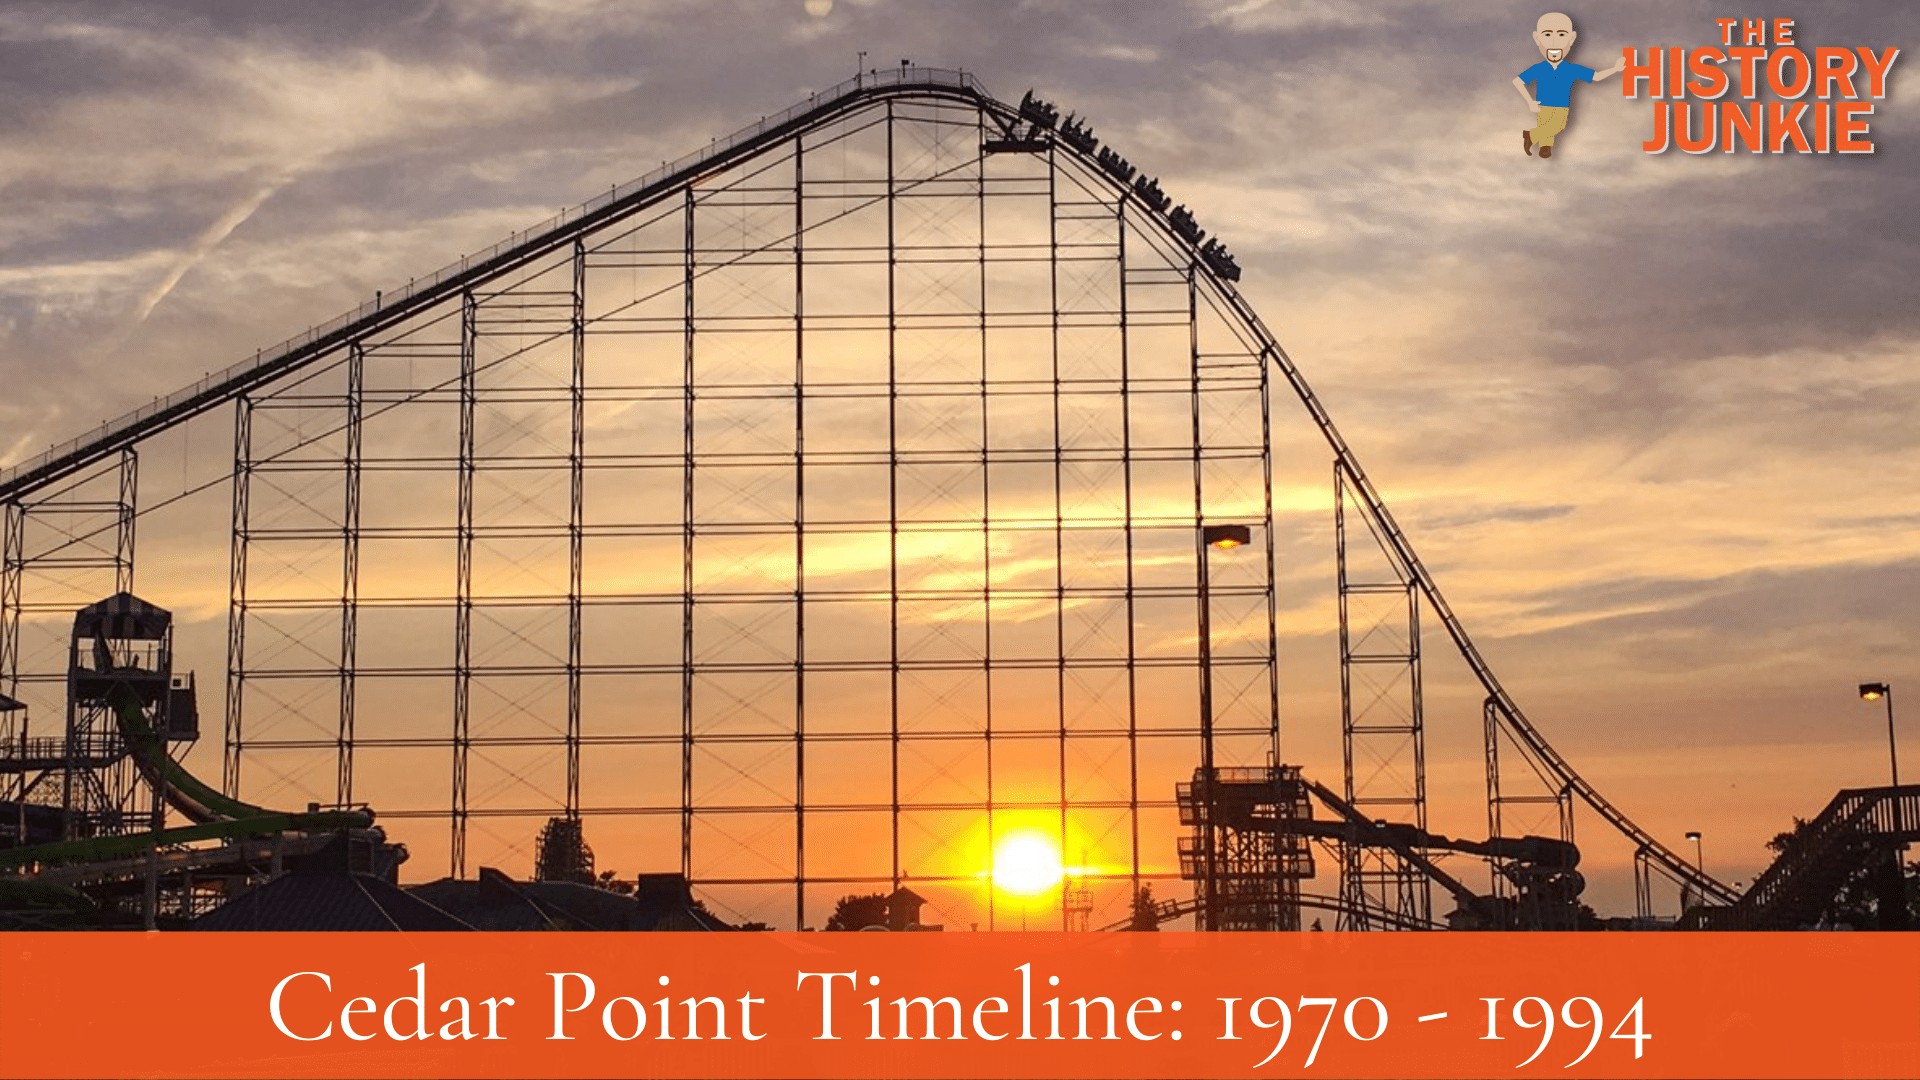 Cedar Point Timeline 1970 - 1994